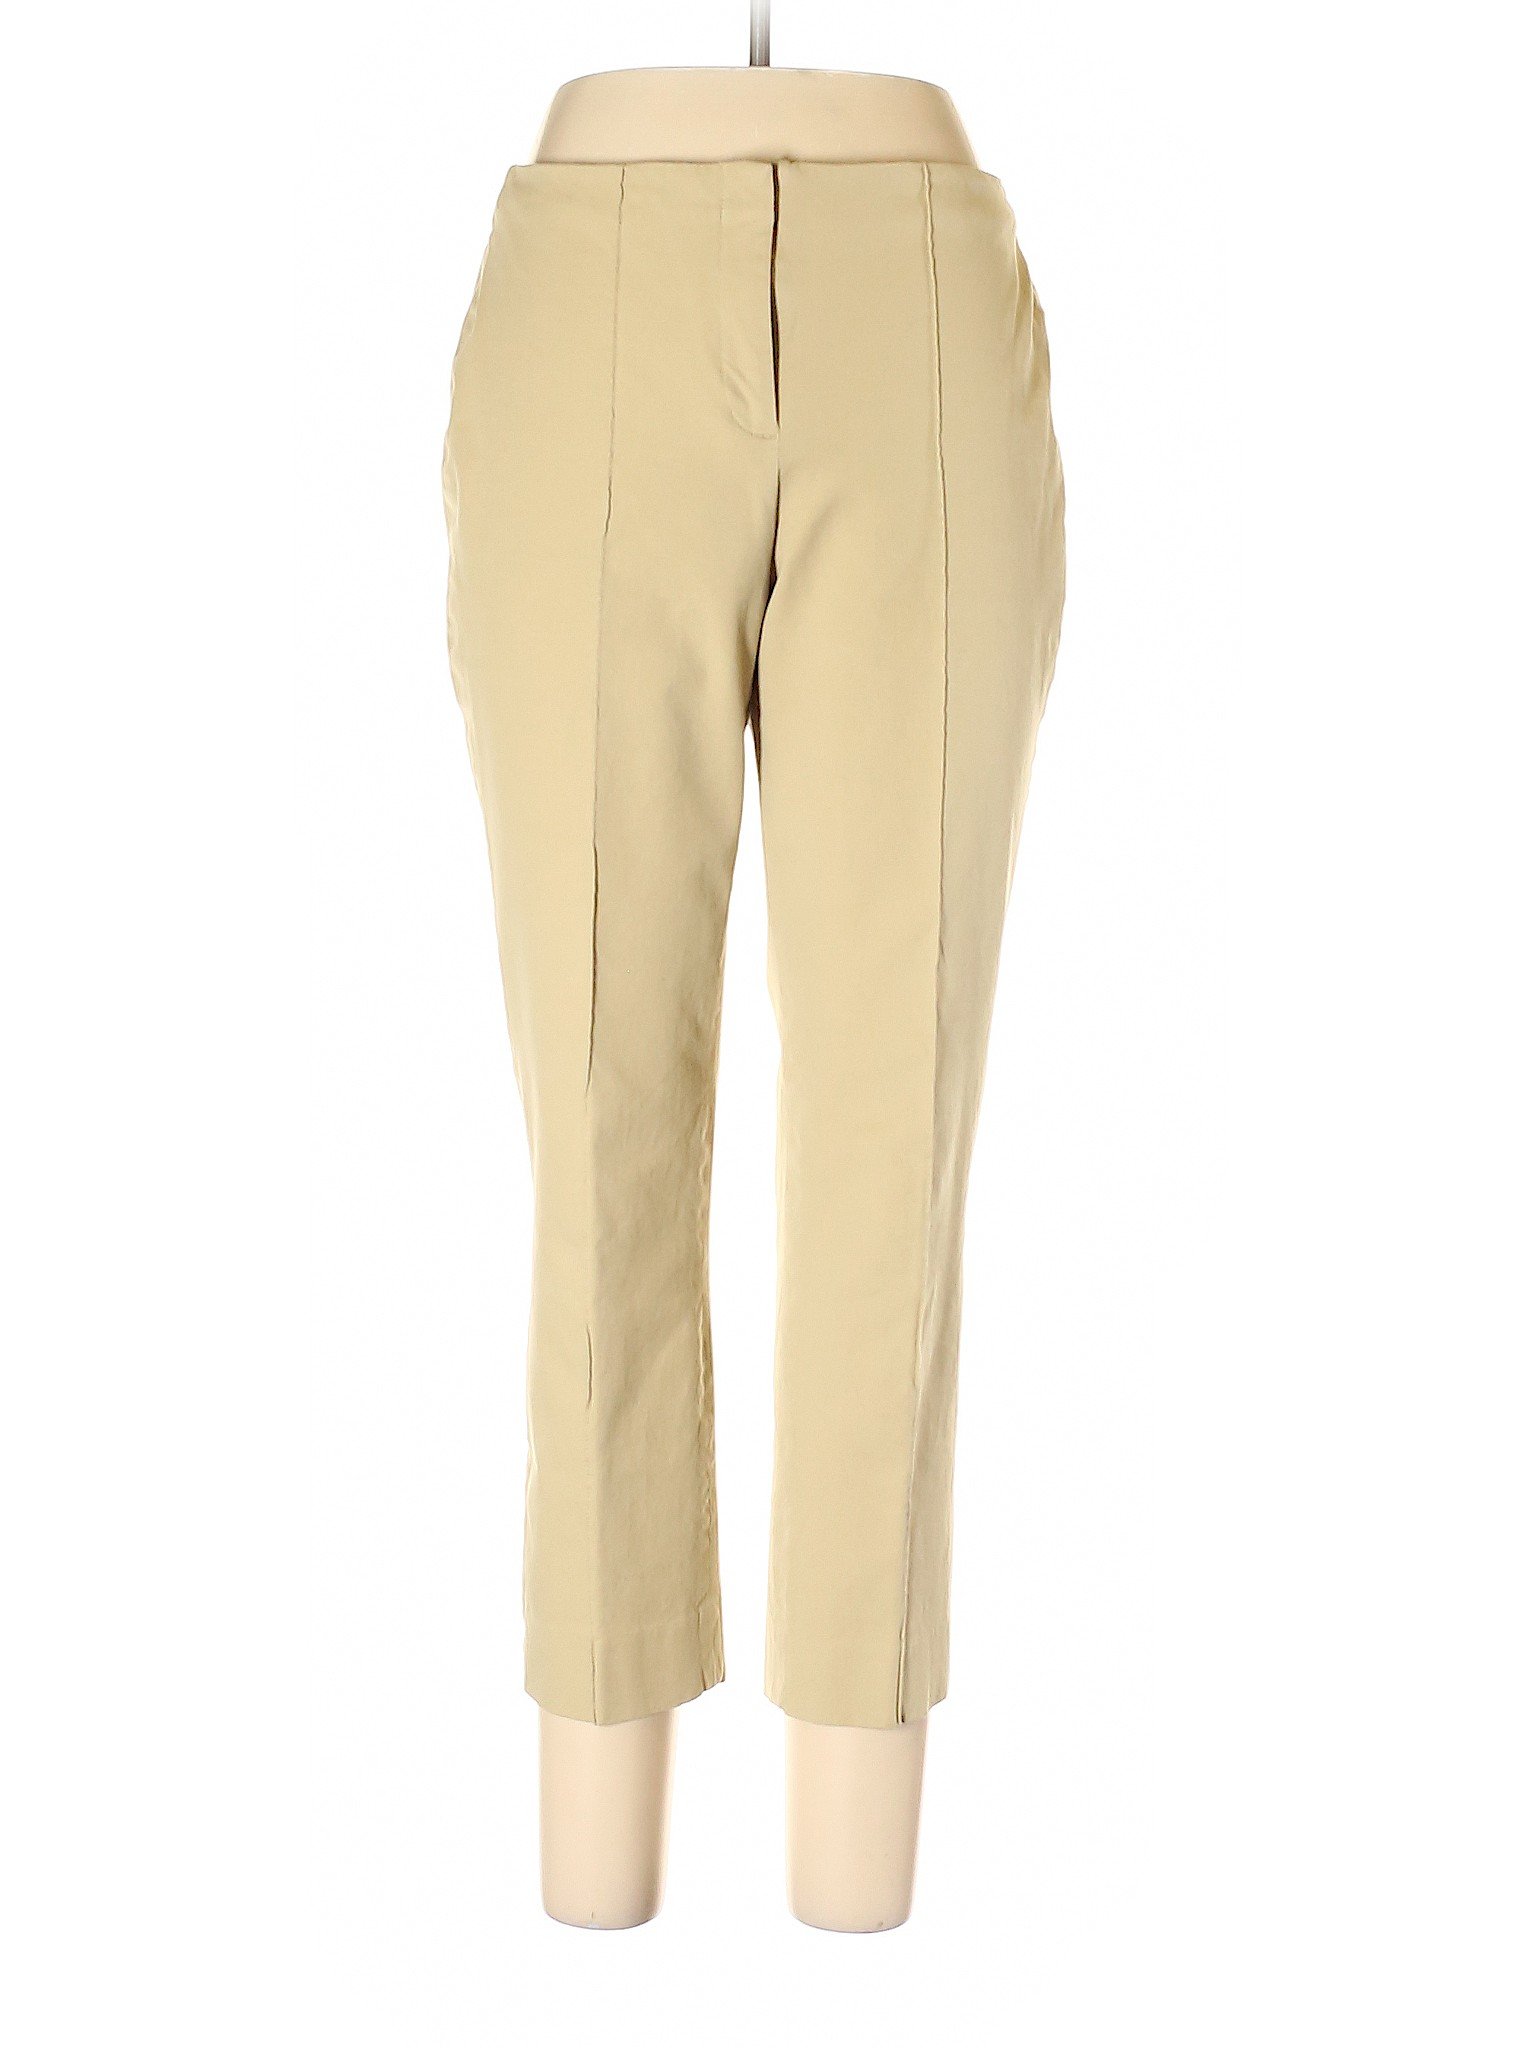 J.jill Women Brown Casual Pants 10 | eBay